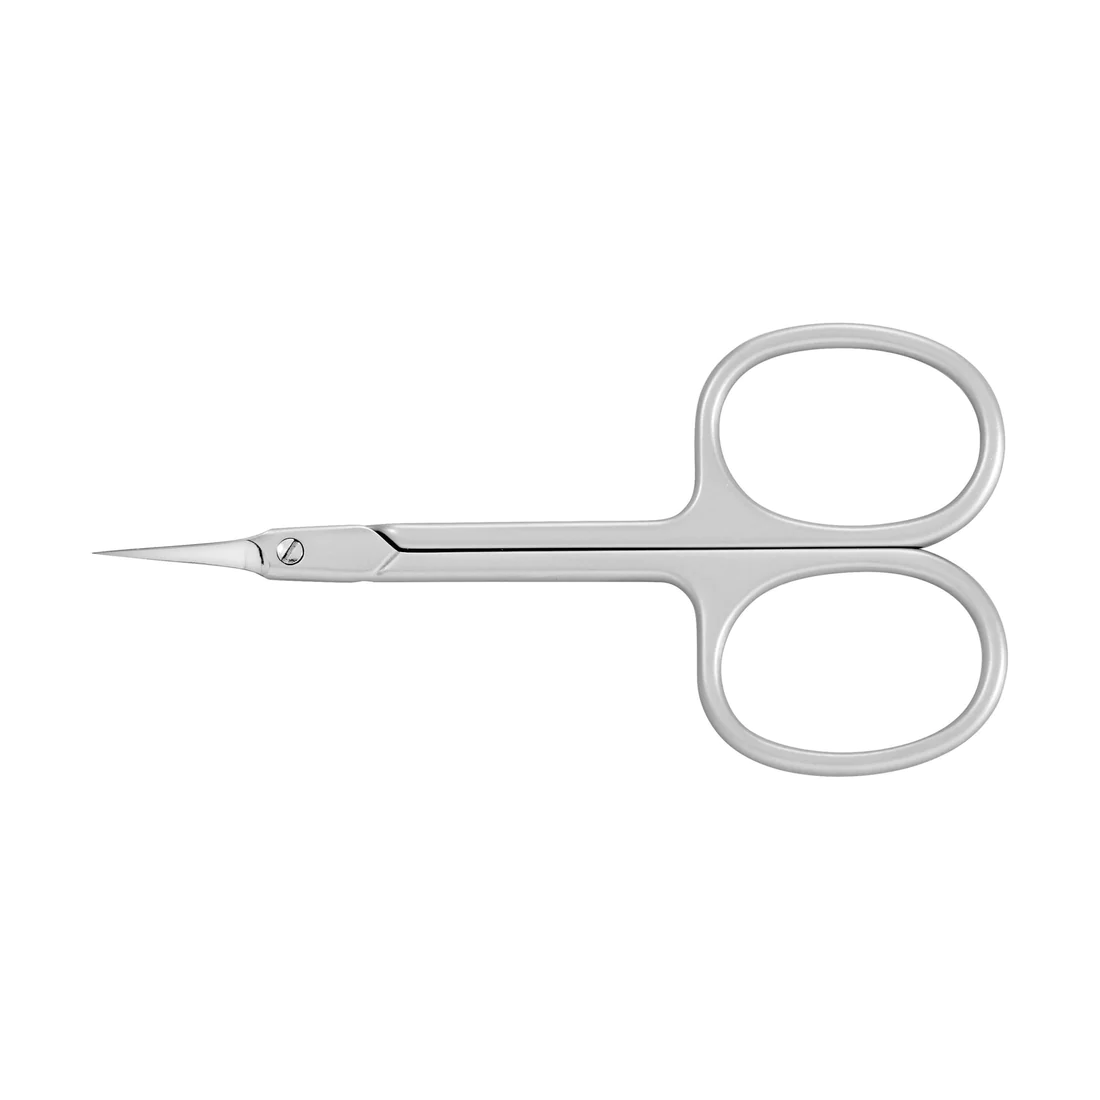 NIPPON NIPPERS Lefty Cuticle scissors S-03L